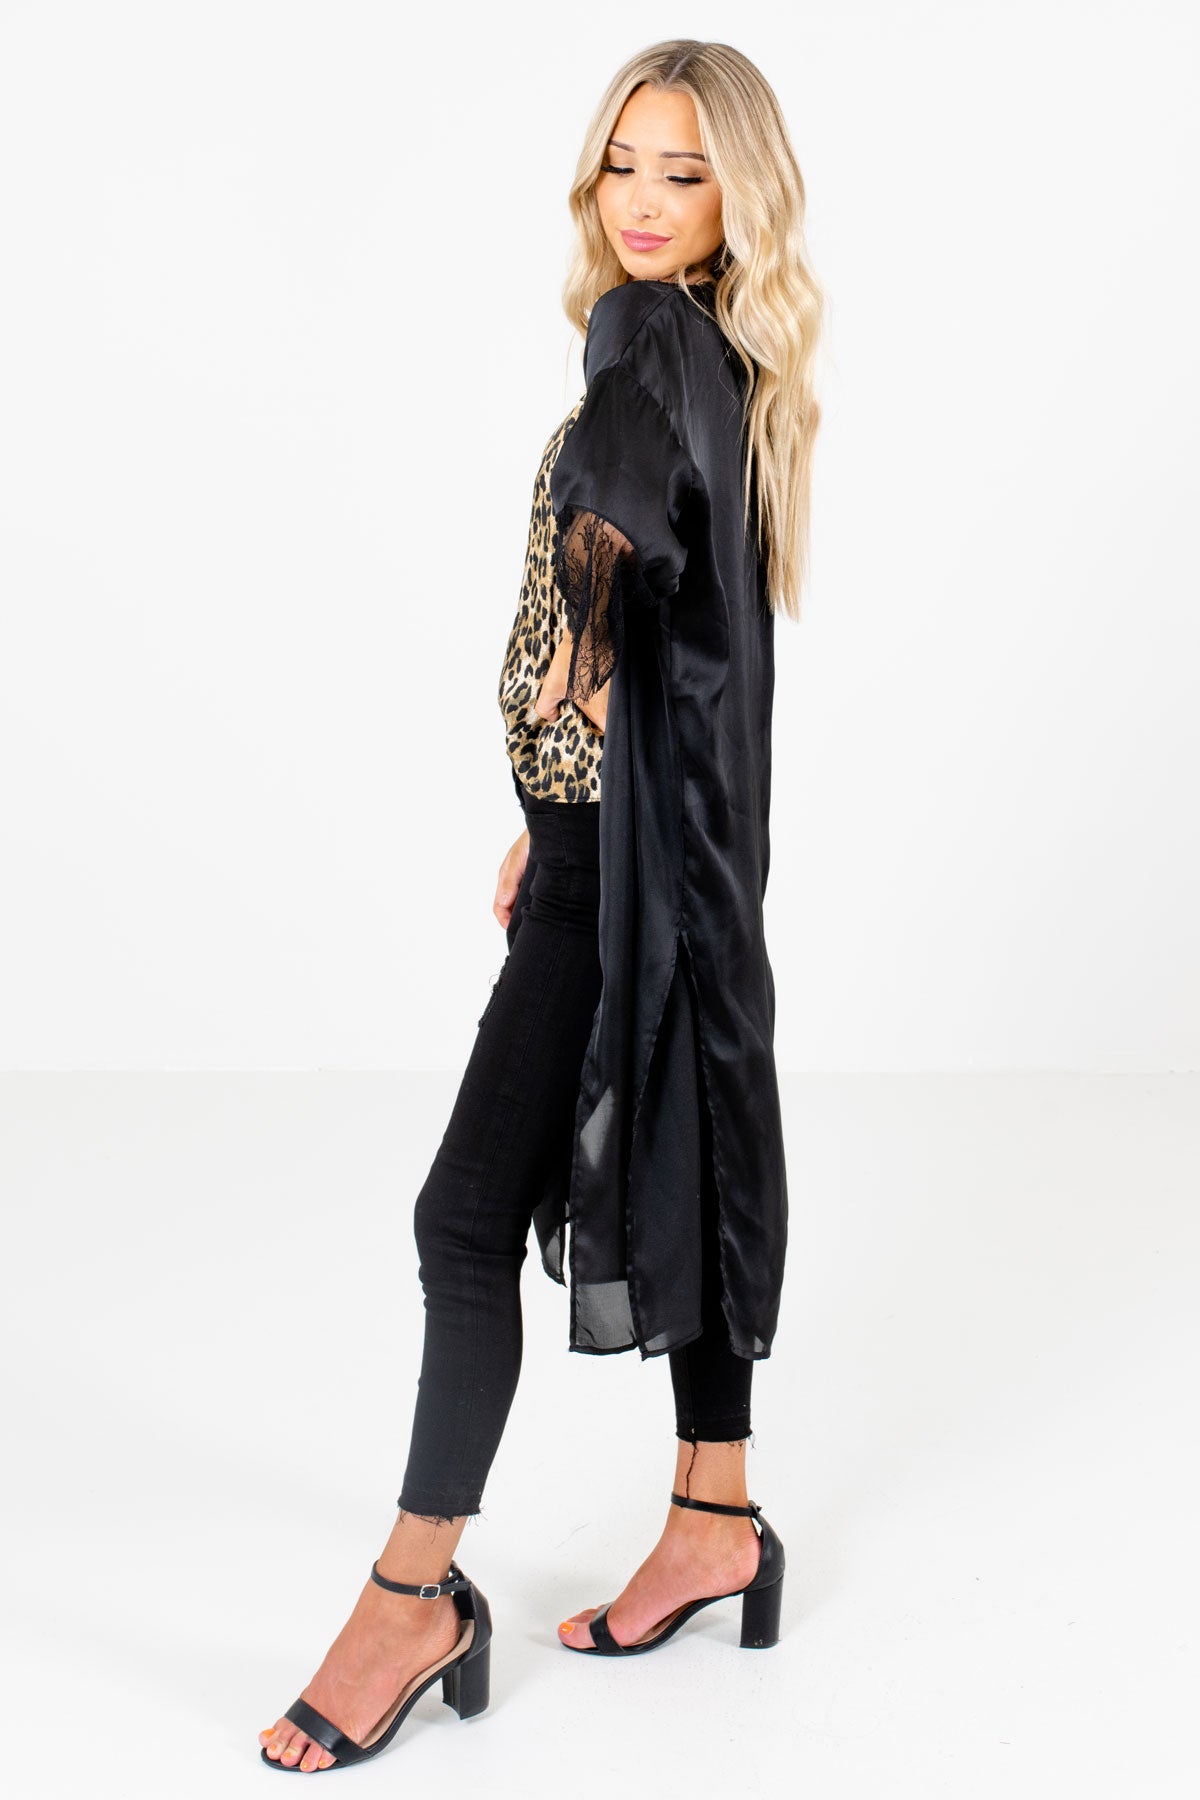 Black Silk-Like Material Boutique Kimonos for Women